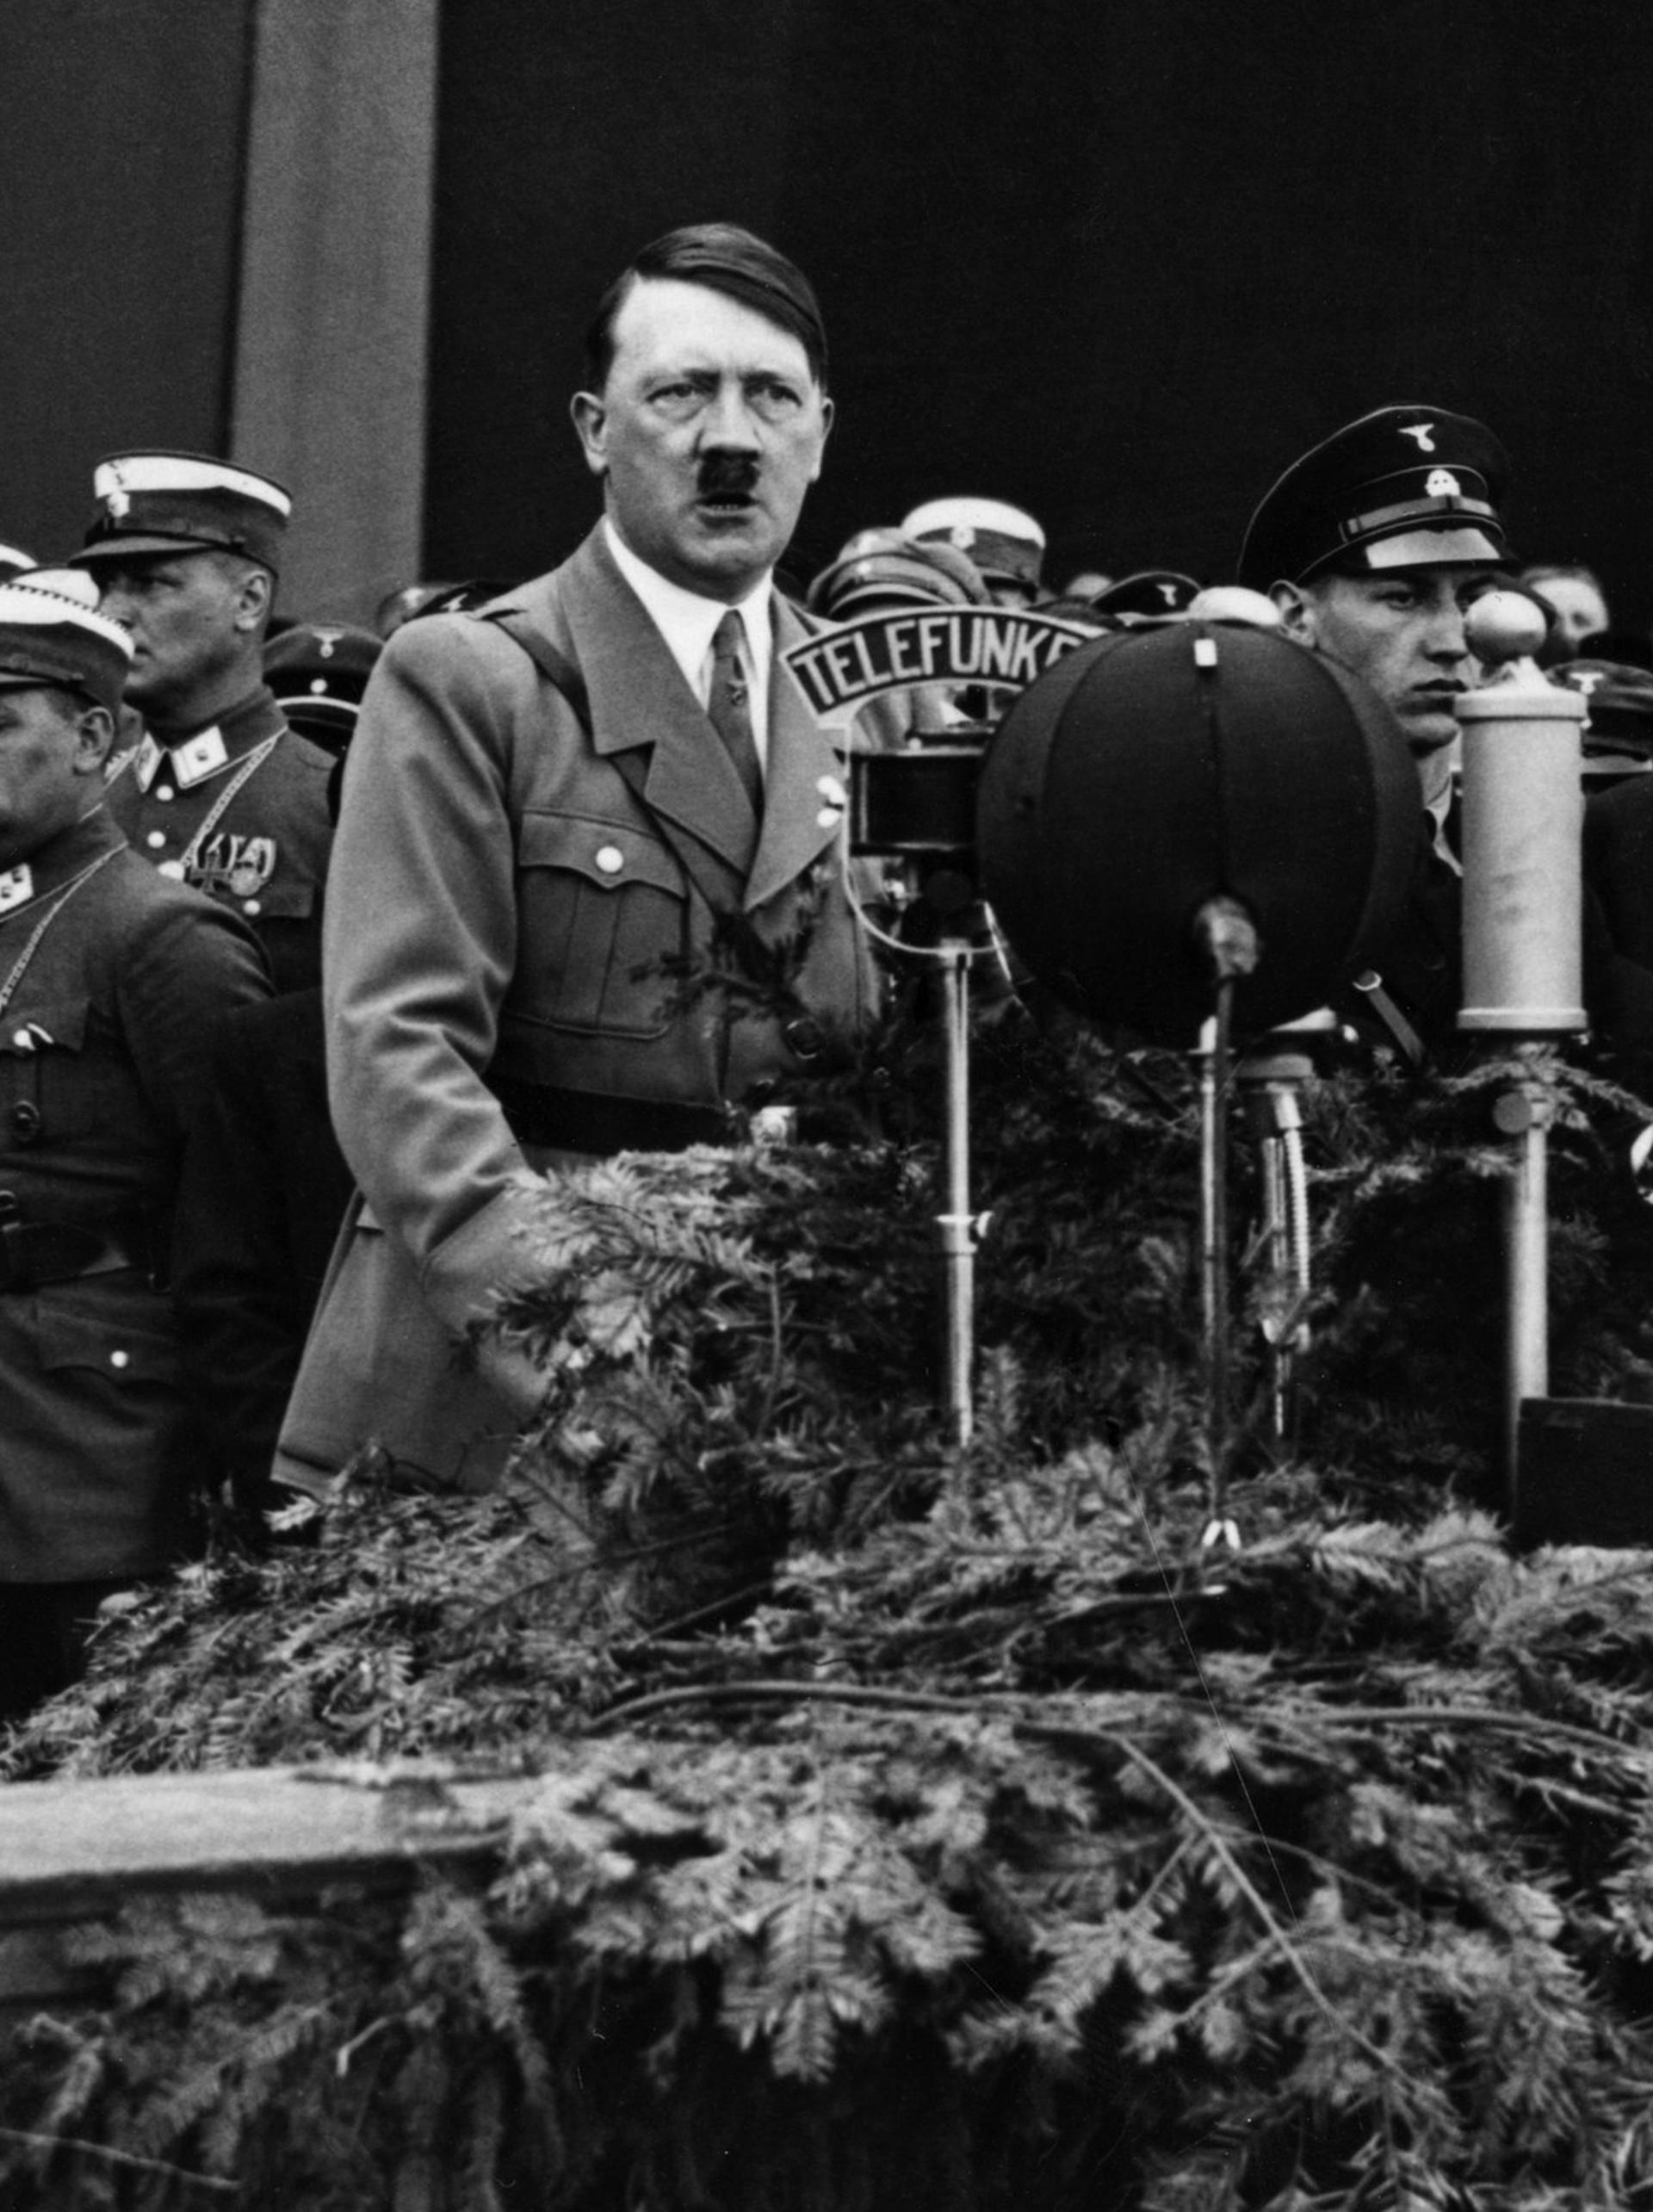 Hitlers Ankunft Lustgarten 1. Mai 1934